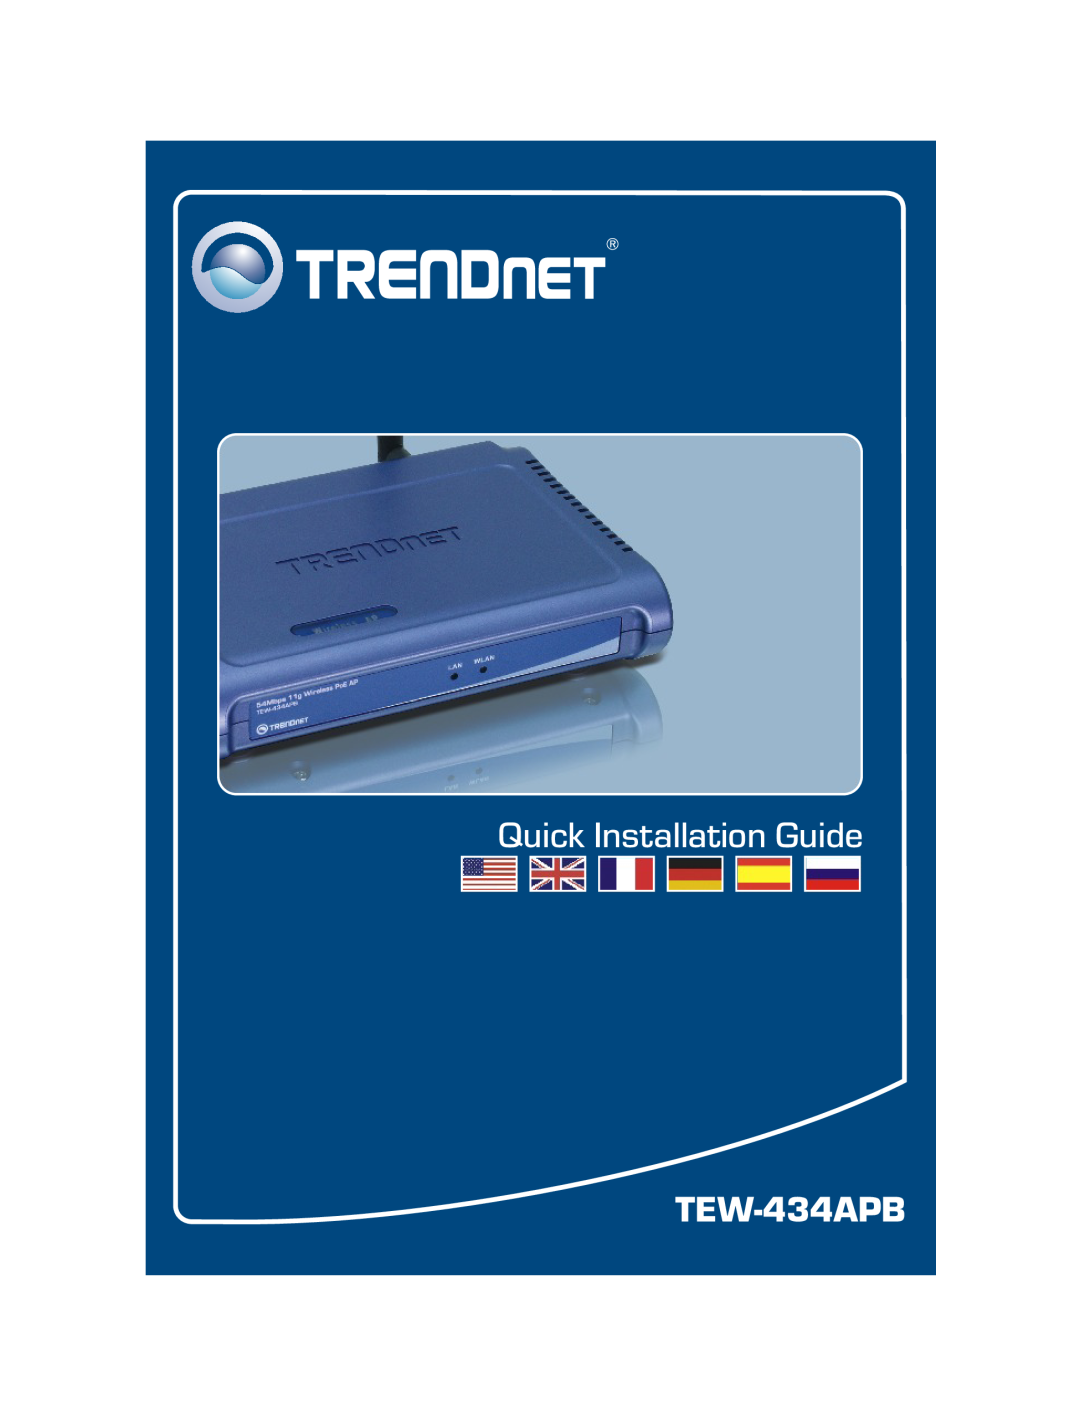 TRENDnet TEW-434APB manual Quick Installation Guide 